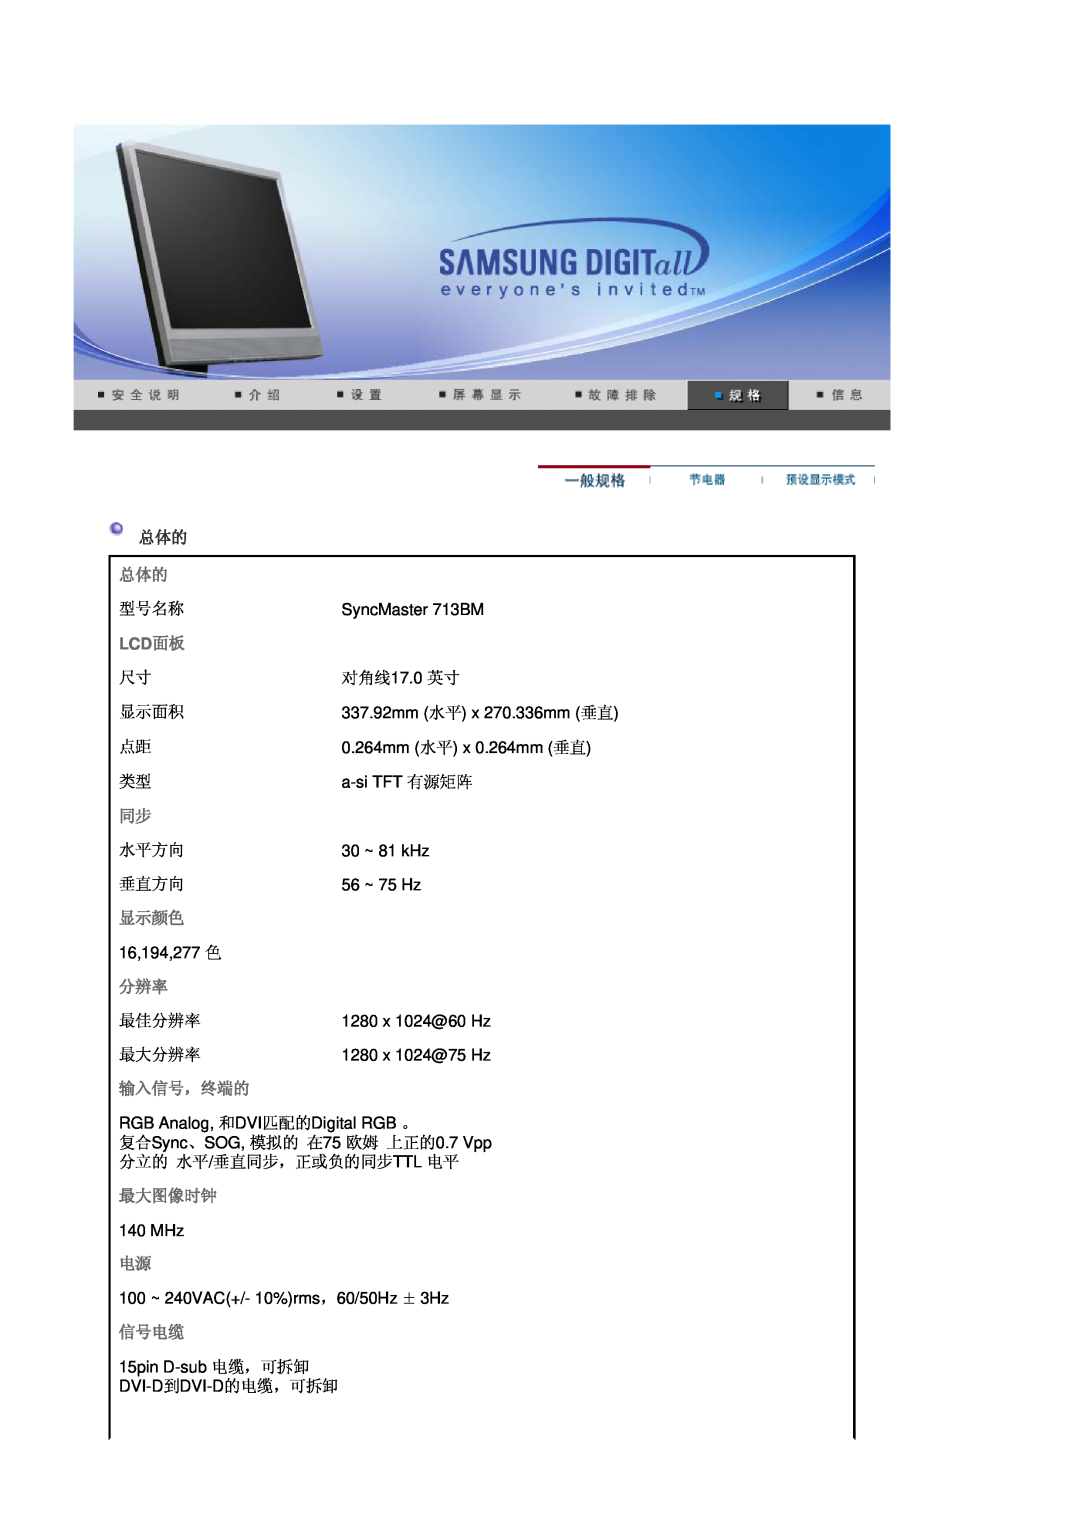 Samsung MJ17MSTSQ/EDC, LS17MJSTSE/EDC, LS19MJSTS7/EDC, MJ19MSTSQ/EDC, LS19MJSTSH/EDC Lcd 面板, 显示颜色, 输入信号，终端的, 最大图像时钟, 信号电缆 